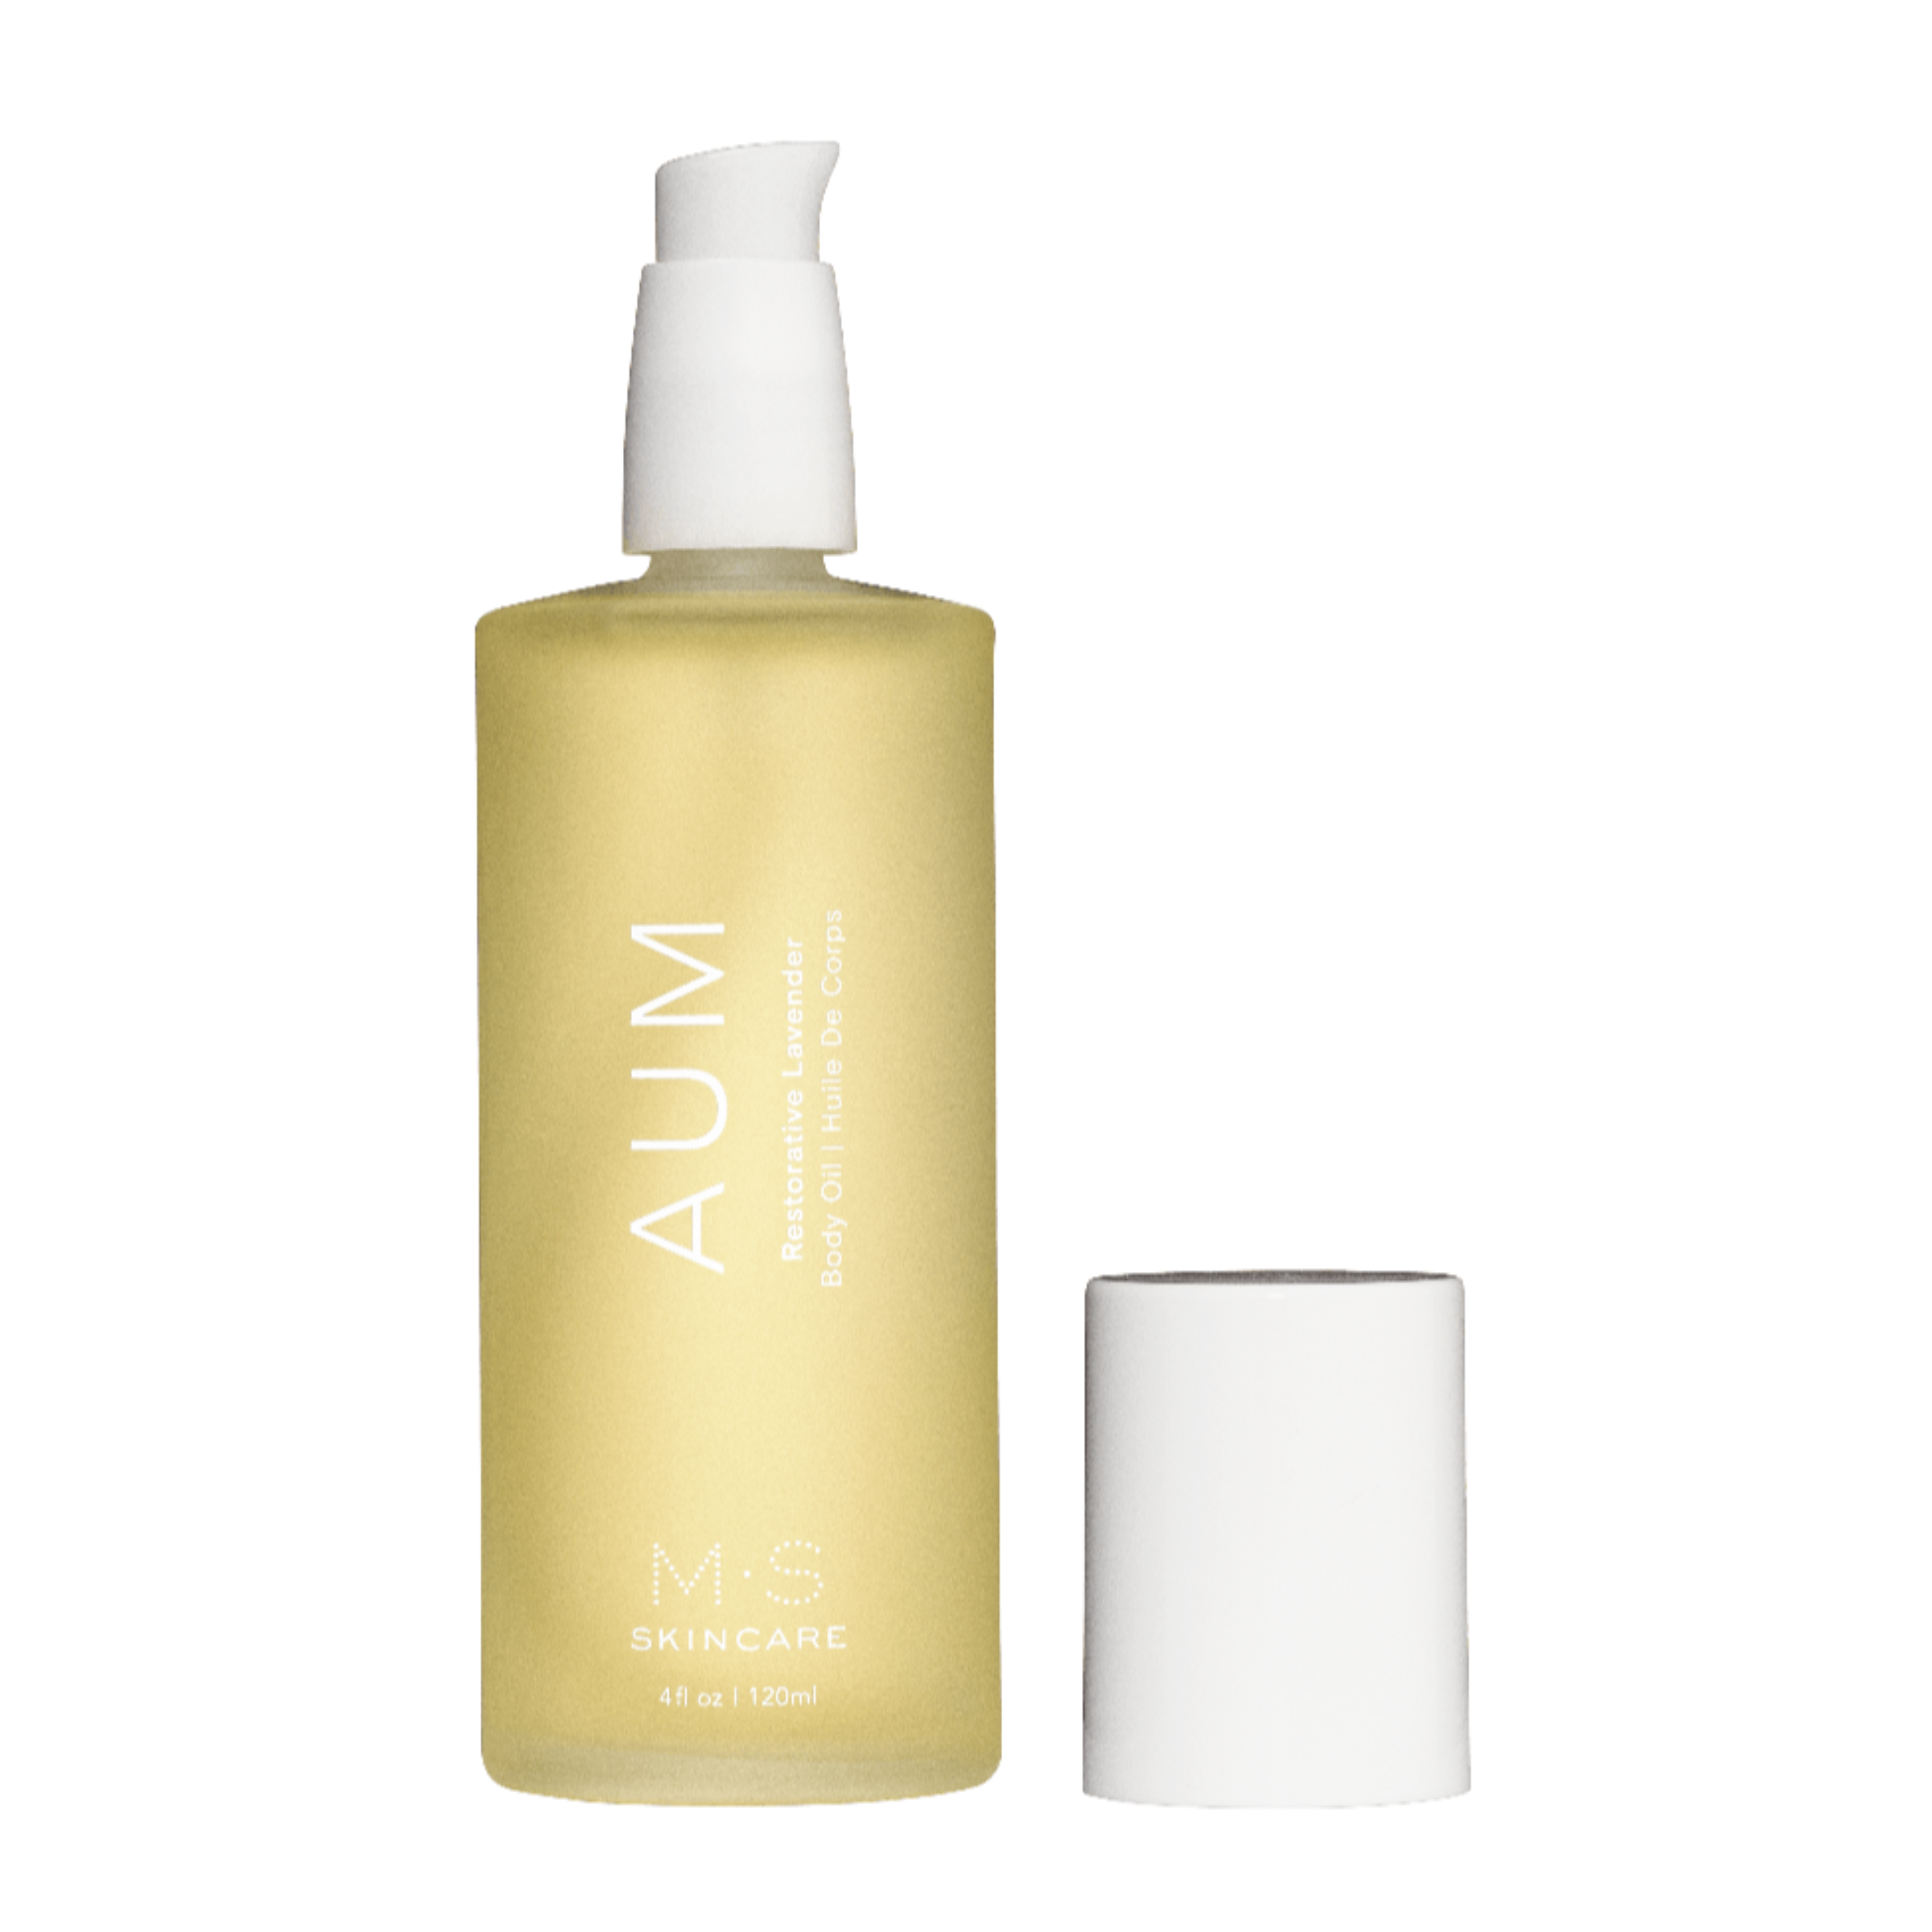 AUM | Restorative Body Oil - M.S Skincare